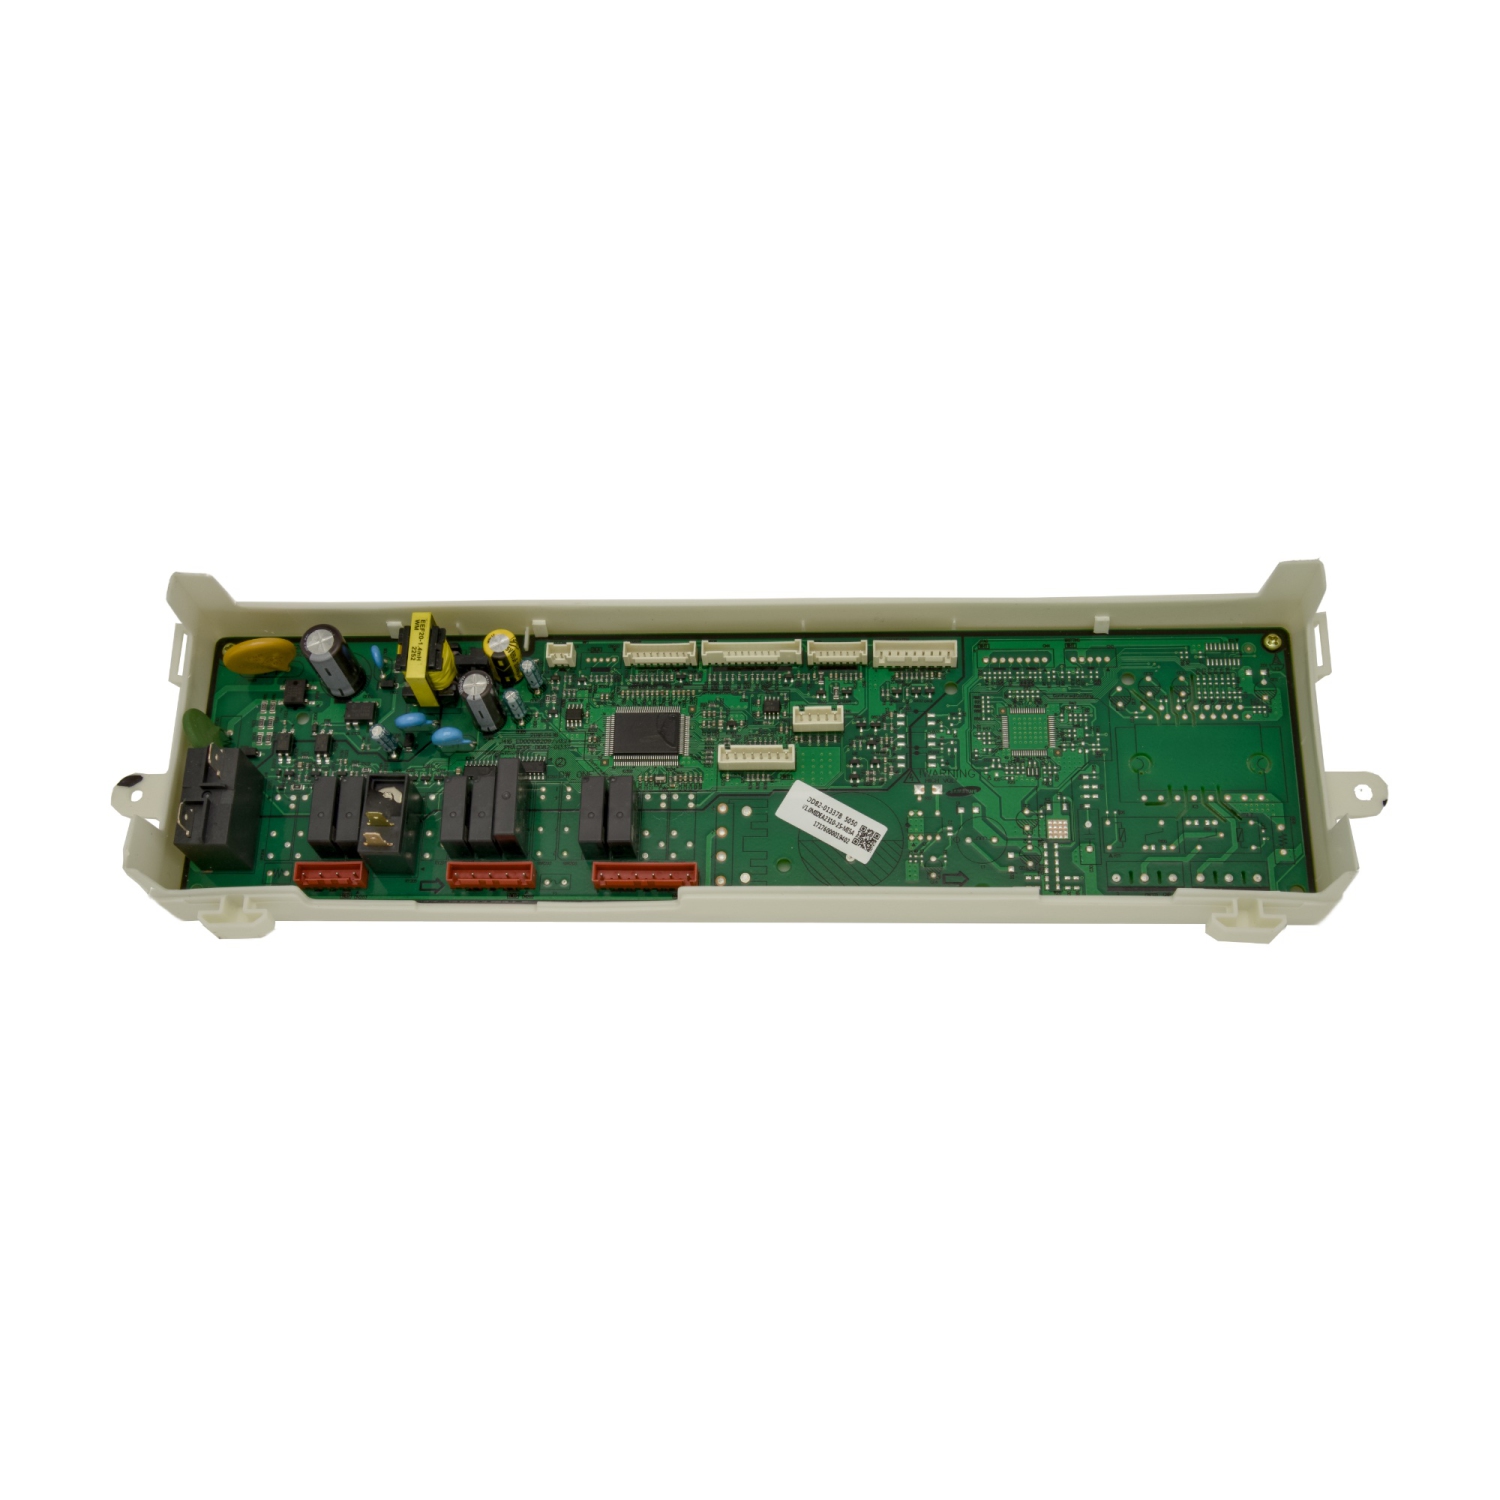 Refurbished (Good) SAMSUNG P/N: DD82-01337B Dishwasher Electronic Control Board Genuine Original Equipment Manufacturer (OEM) Part